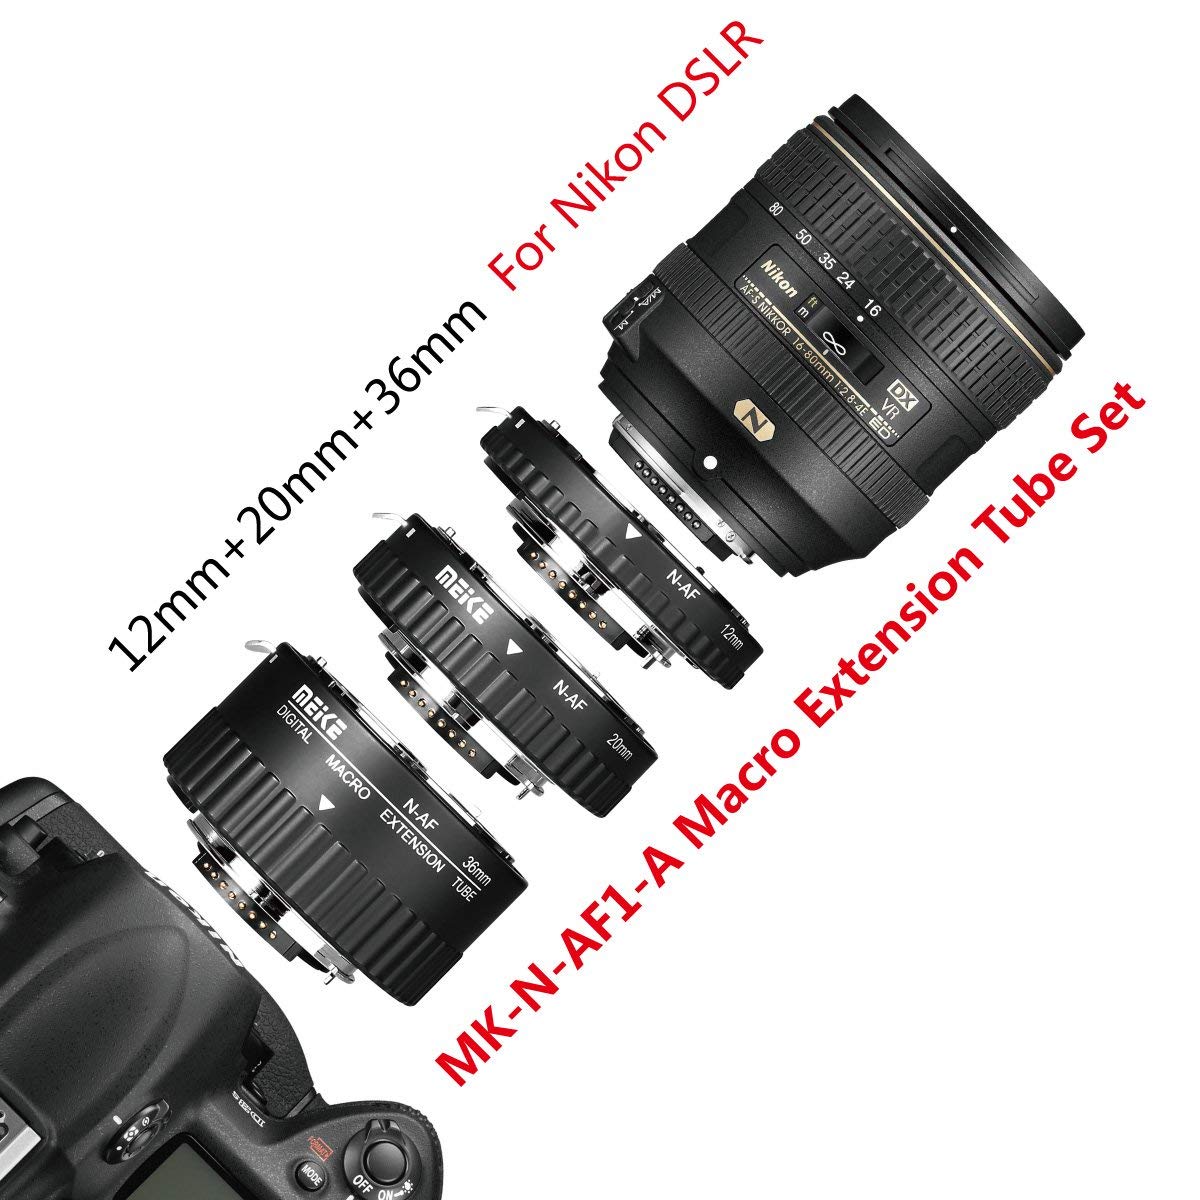 MEIKE N-AF1-A Macro Electronic Mount Auto Foucs Macro Metal Extension Tube Adapter for Nikon DSLR Camera D80 D90 D300 D300SD800 D3100 D3200 D5000 D5100 D5200 D7000 D7100 etc